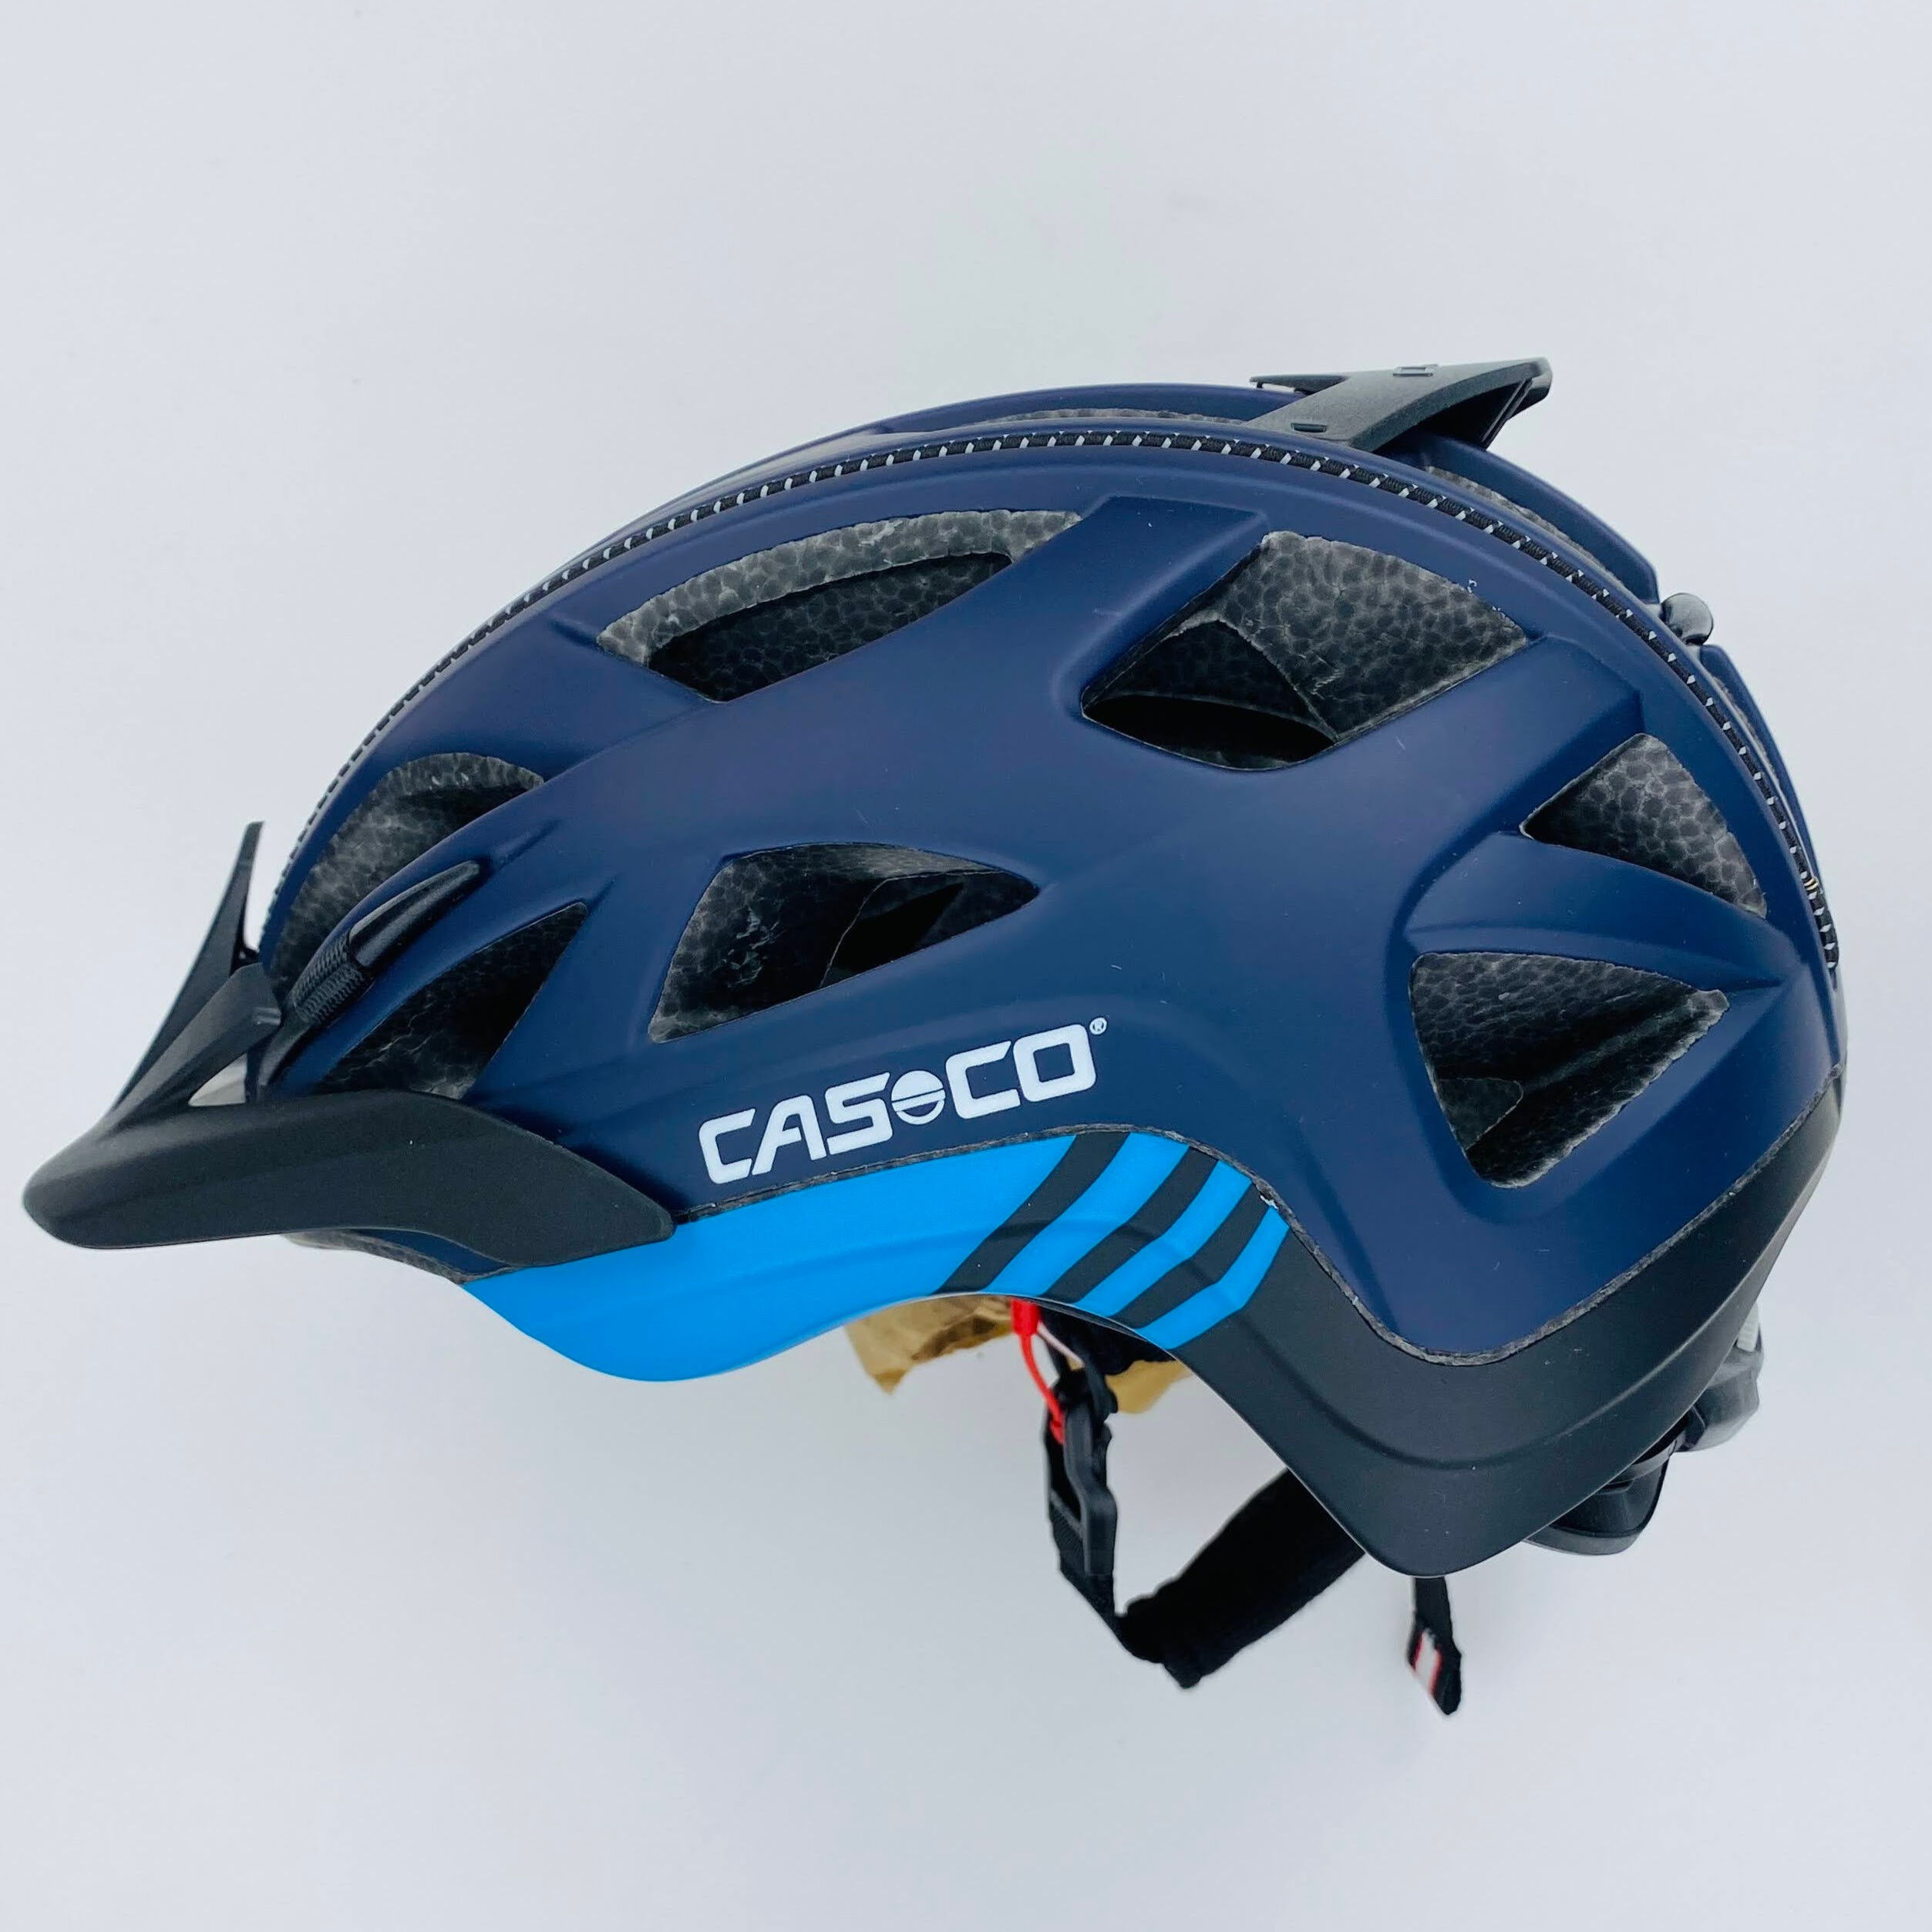 Casco Activ 2 - Seconde main Casque vélo - Bleu pétrole - 52-56 cm | Hardloop